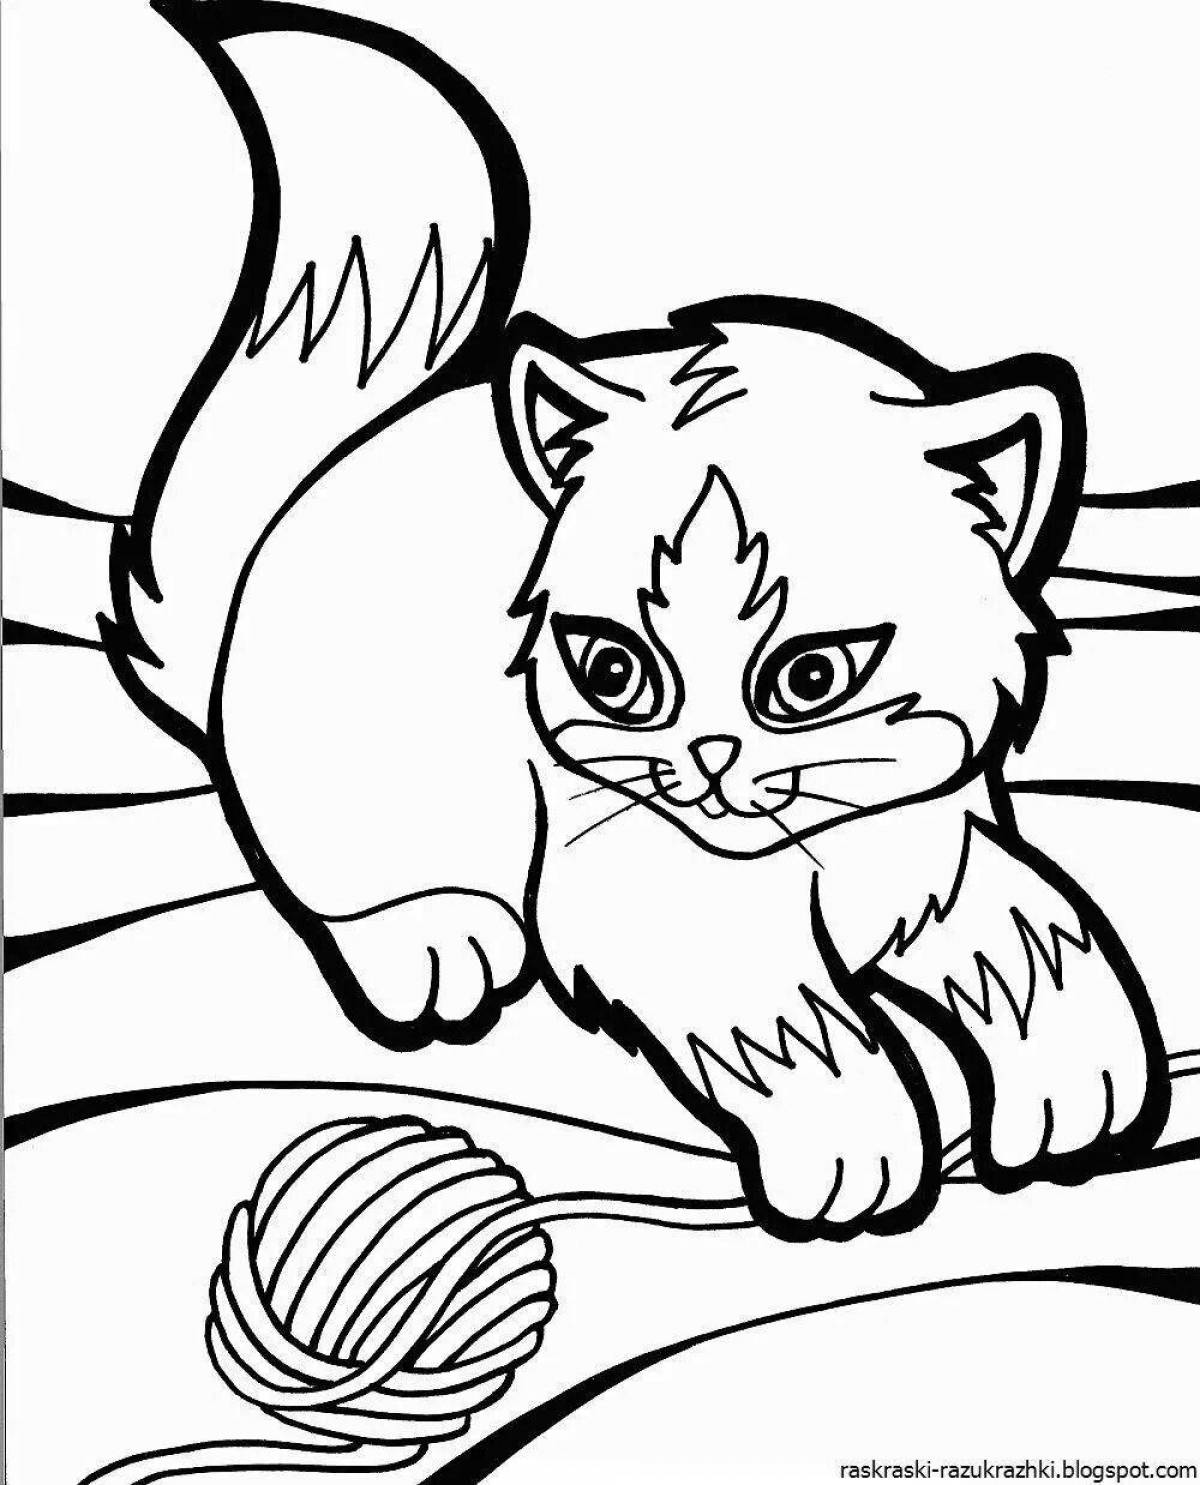 Fancy cat coloring pages